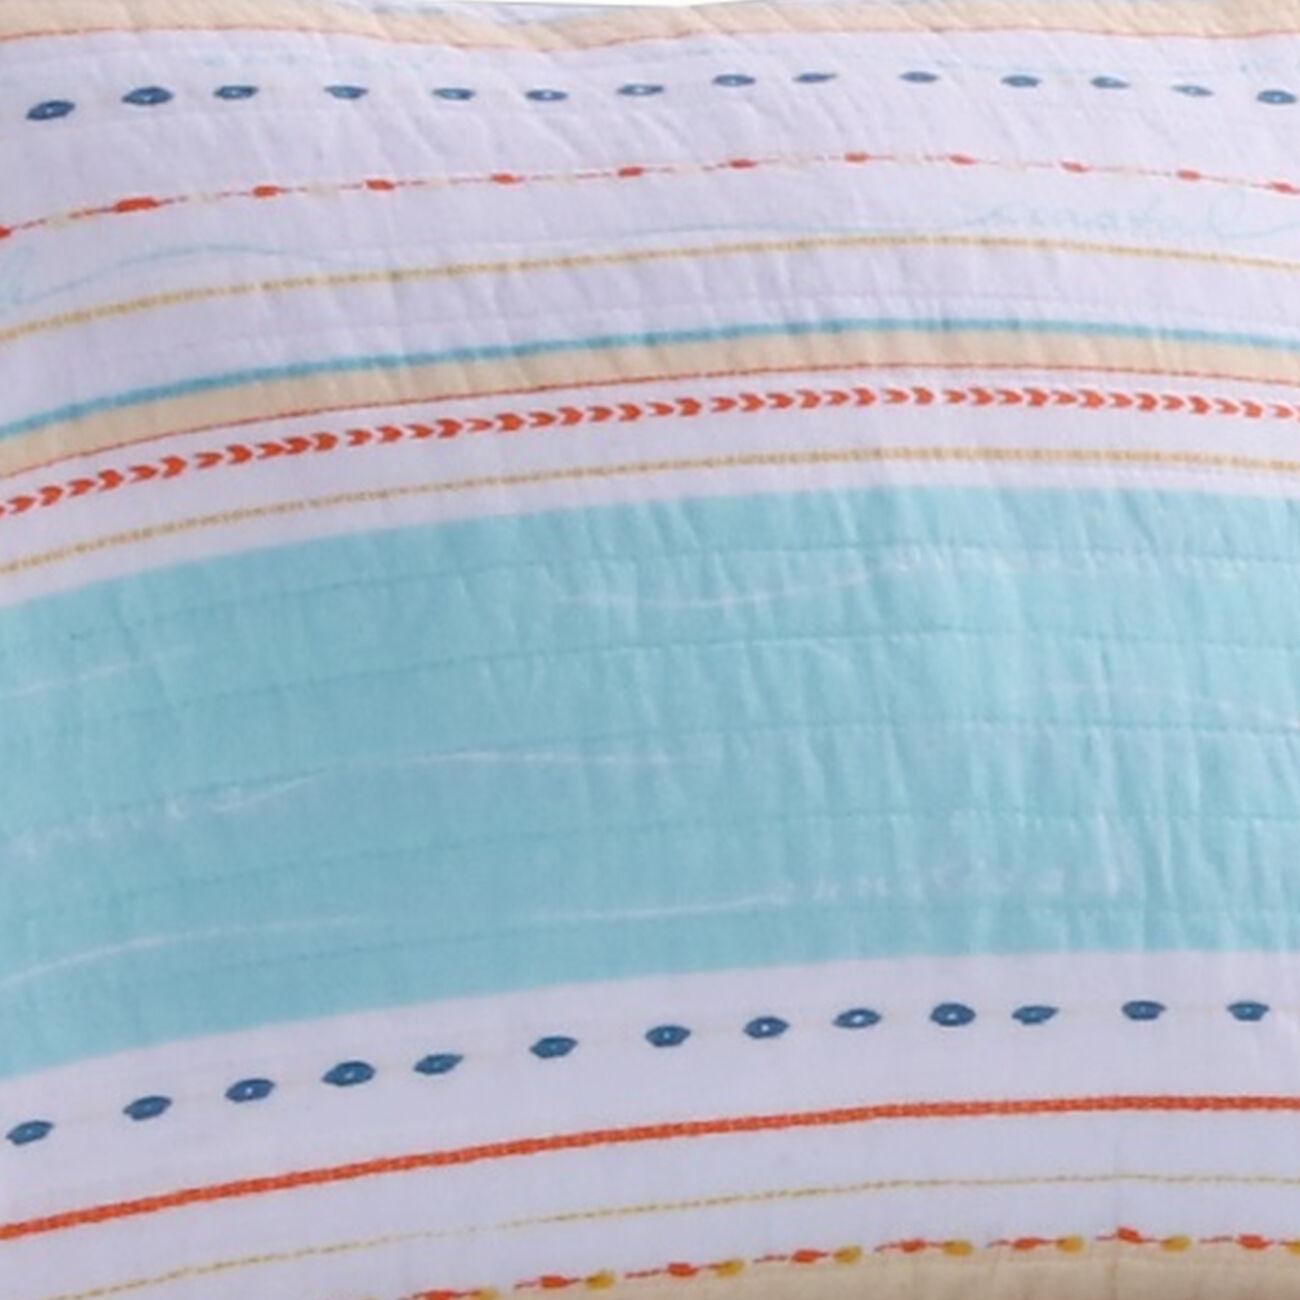 36 x 20 Inches King Size Pillow Sham with Stripe Print, Aqua Blue